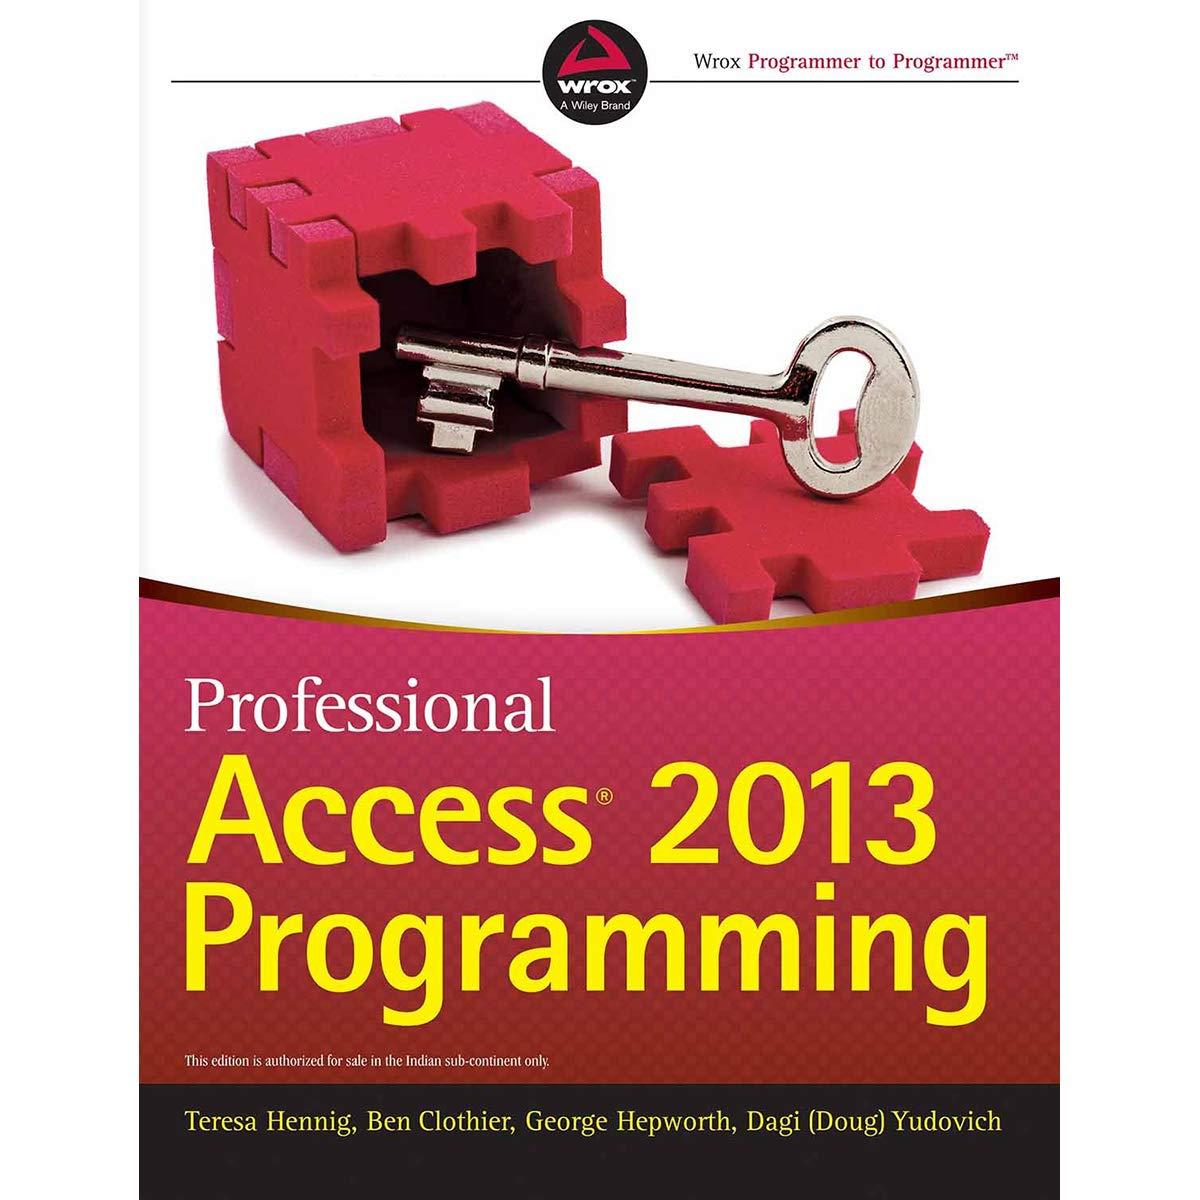 professional access 2013 programming 1st edition ben clothier, teresa hennig, george hepworth, dagi (doug)